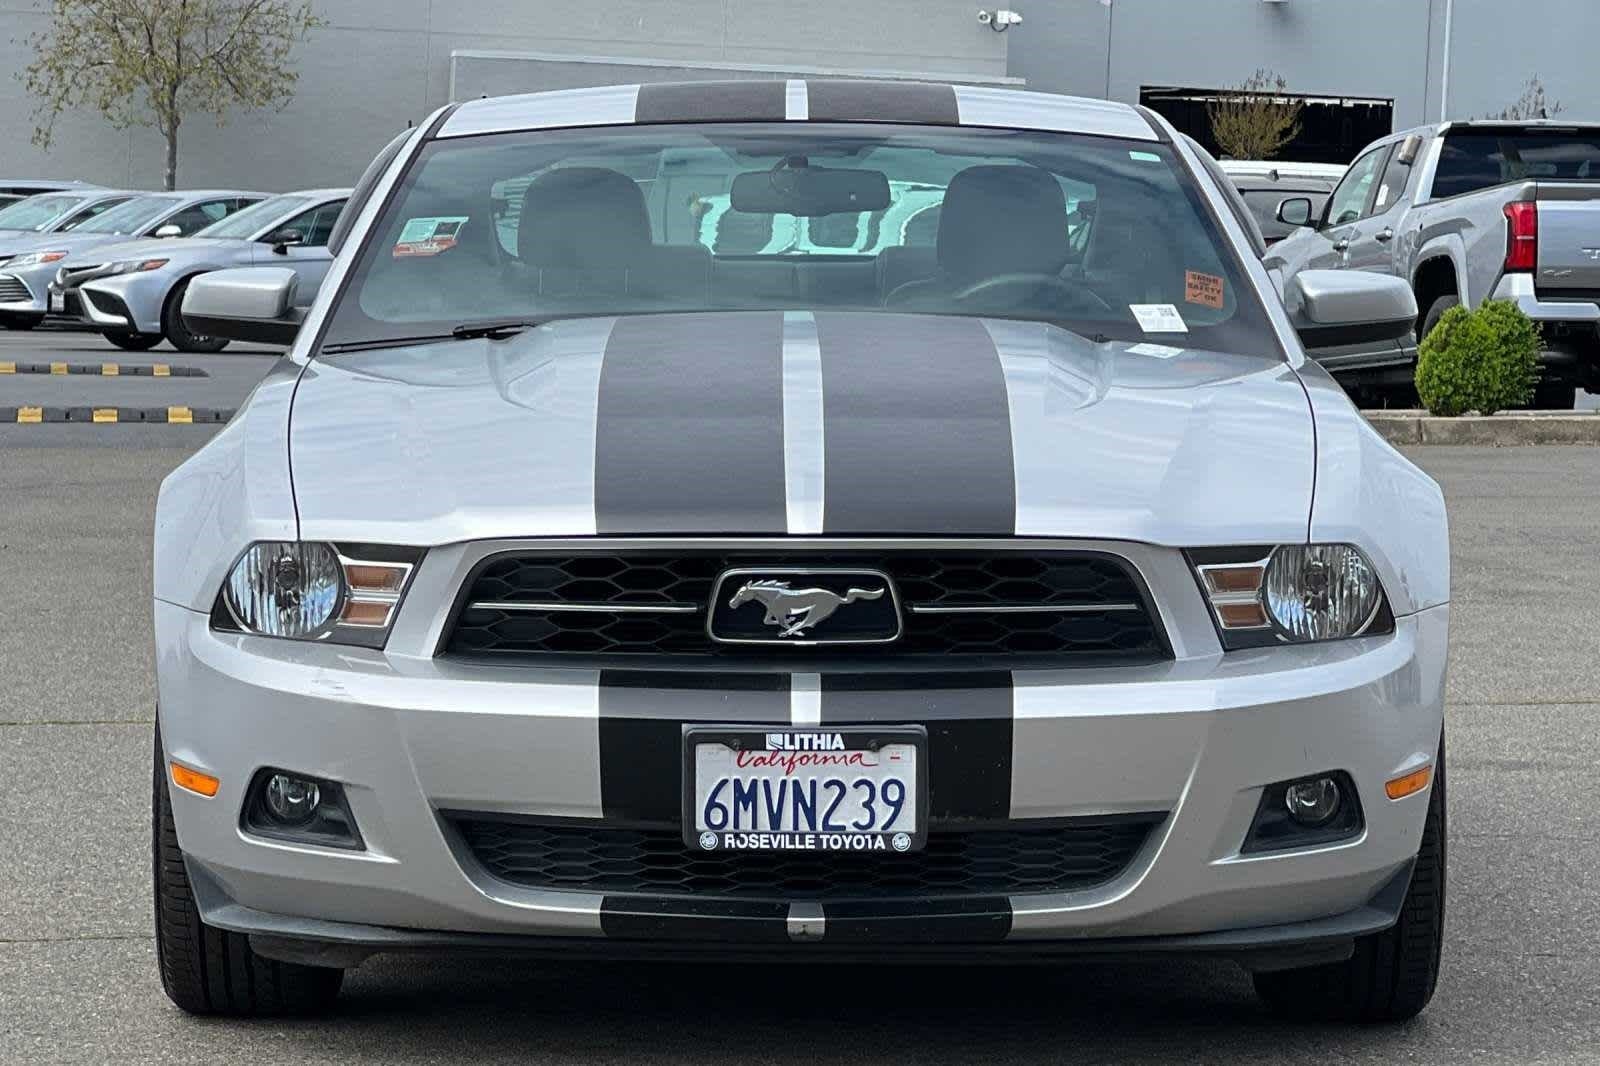 2010 Ford Mustang V6